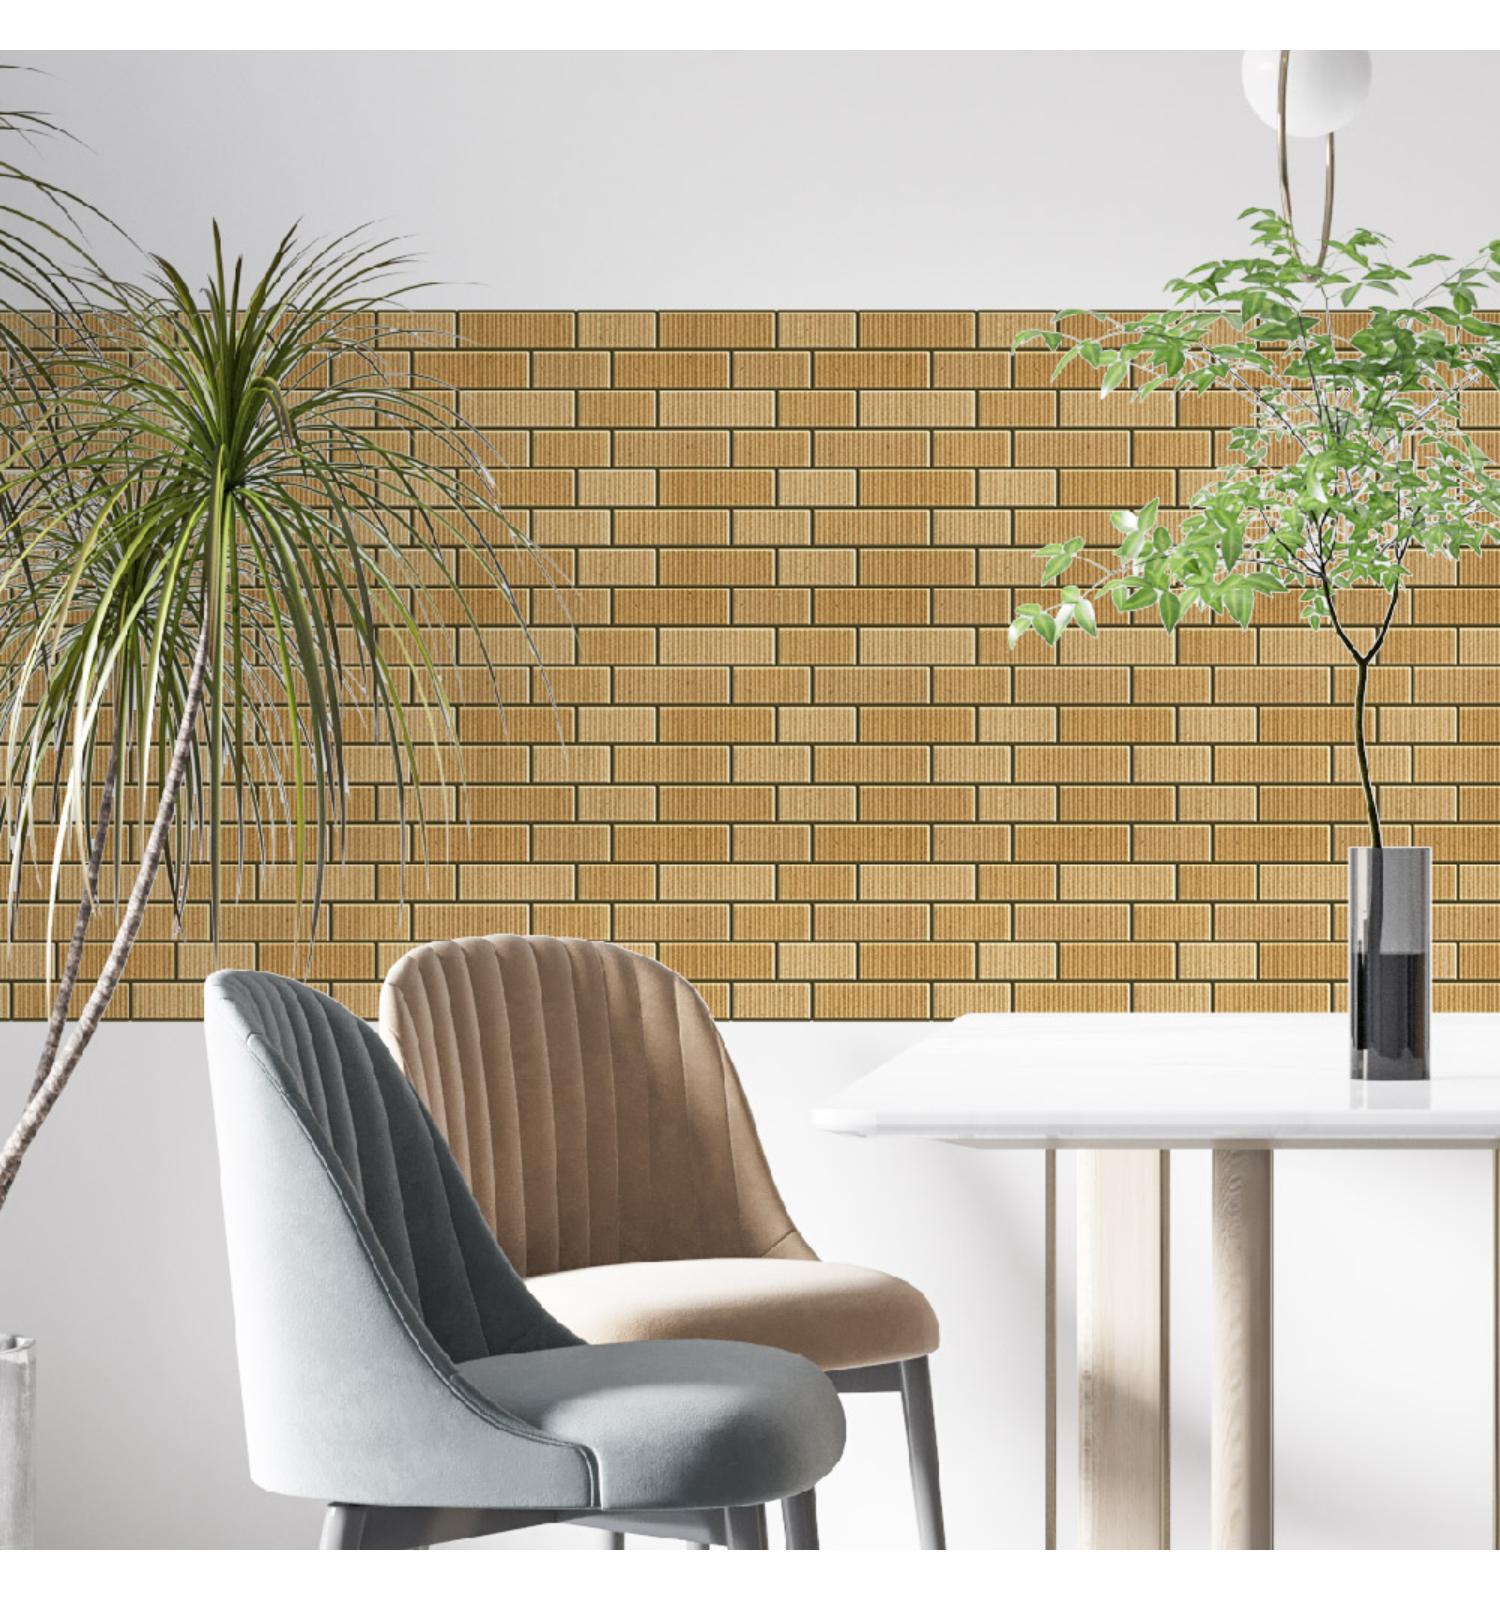 Orange Subway Peel and Stick Wall Tile | Kitchen Backsplash Tiles | Self Adhesive Tiles For Home Decor